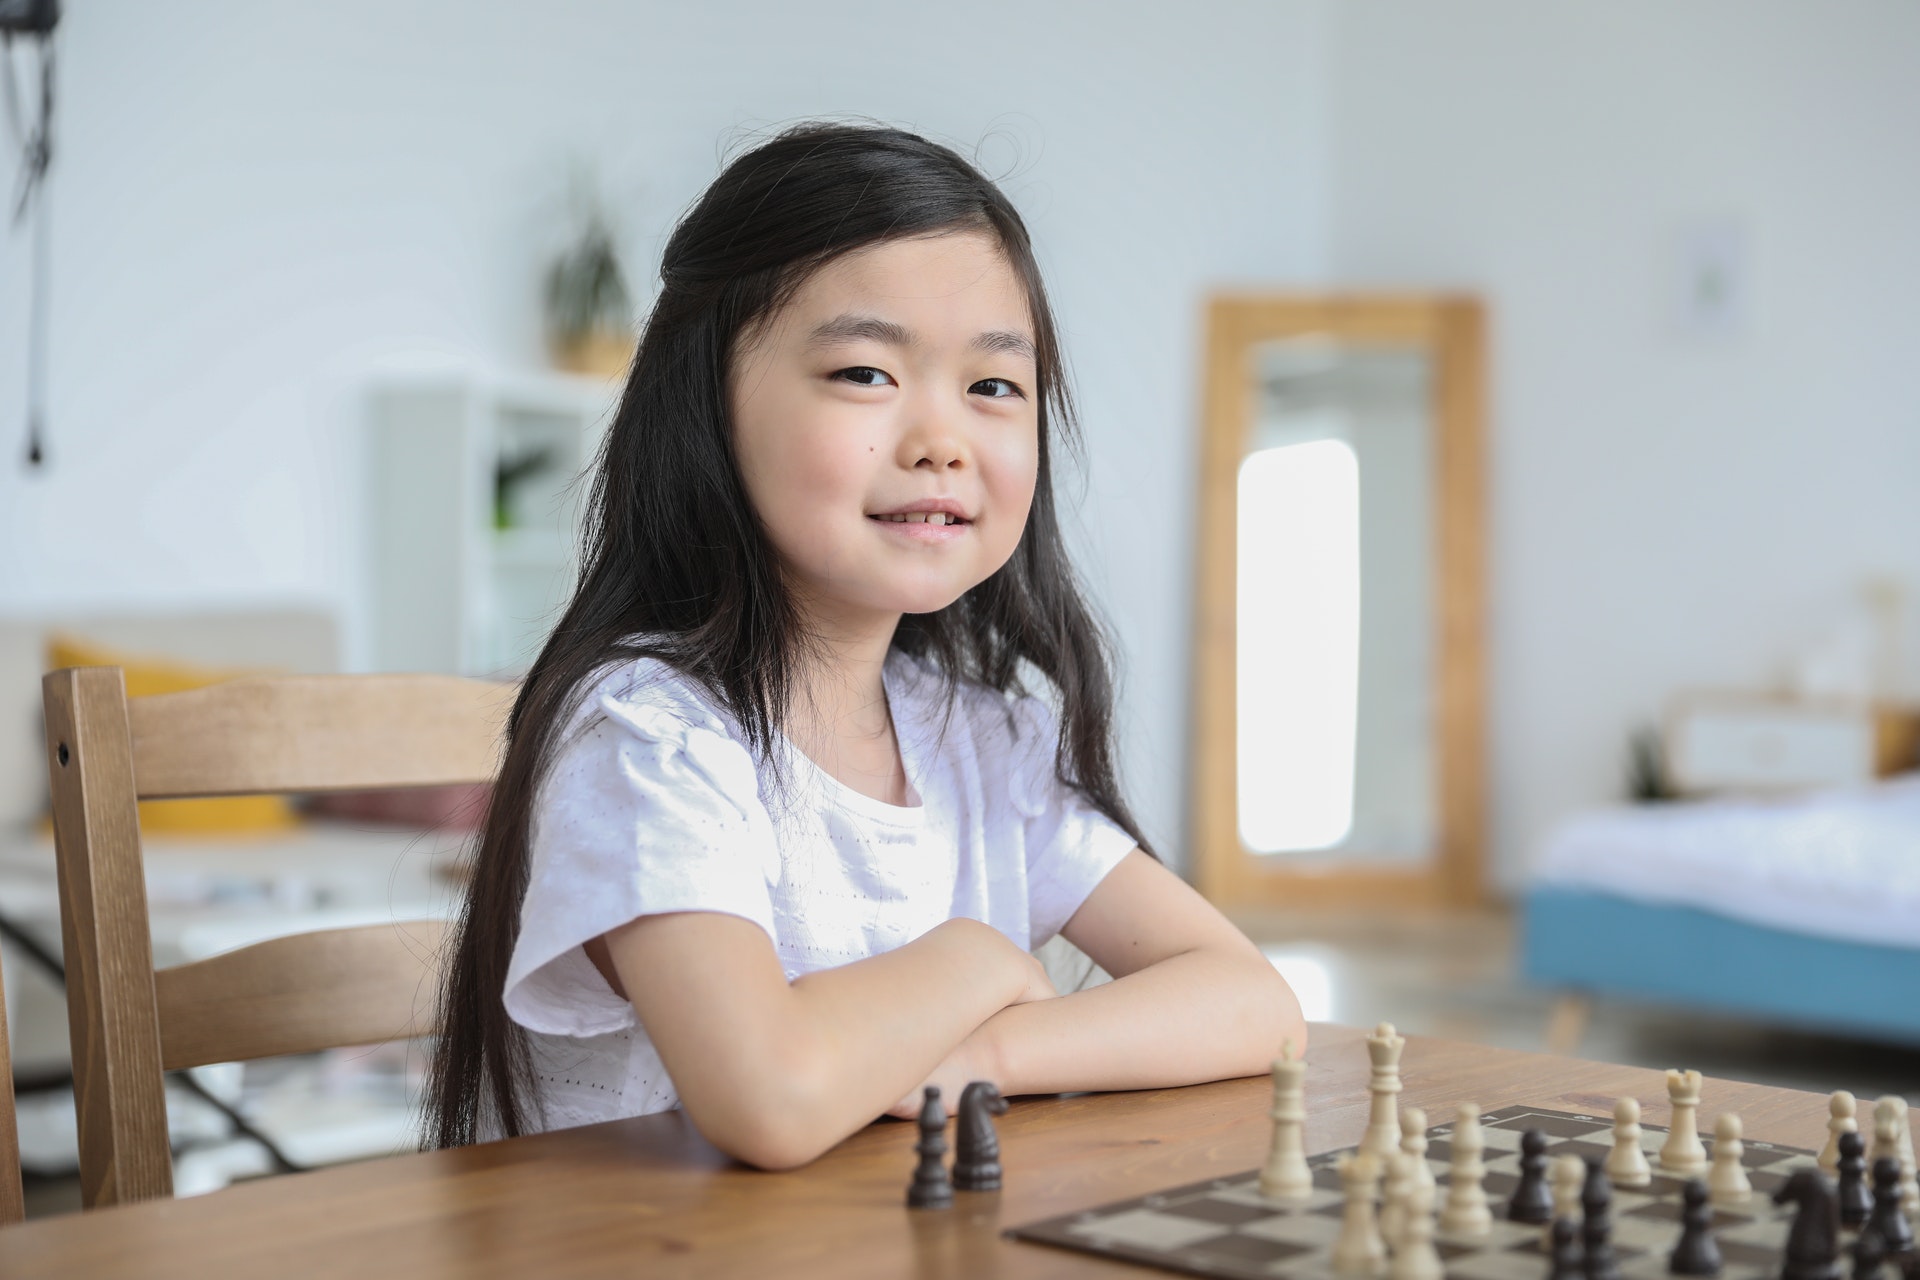 Young_child_memorizing_chess_checkers_techniques_和_tricks.jpg